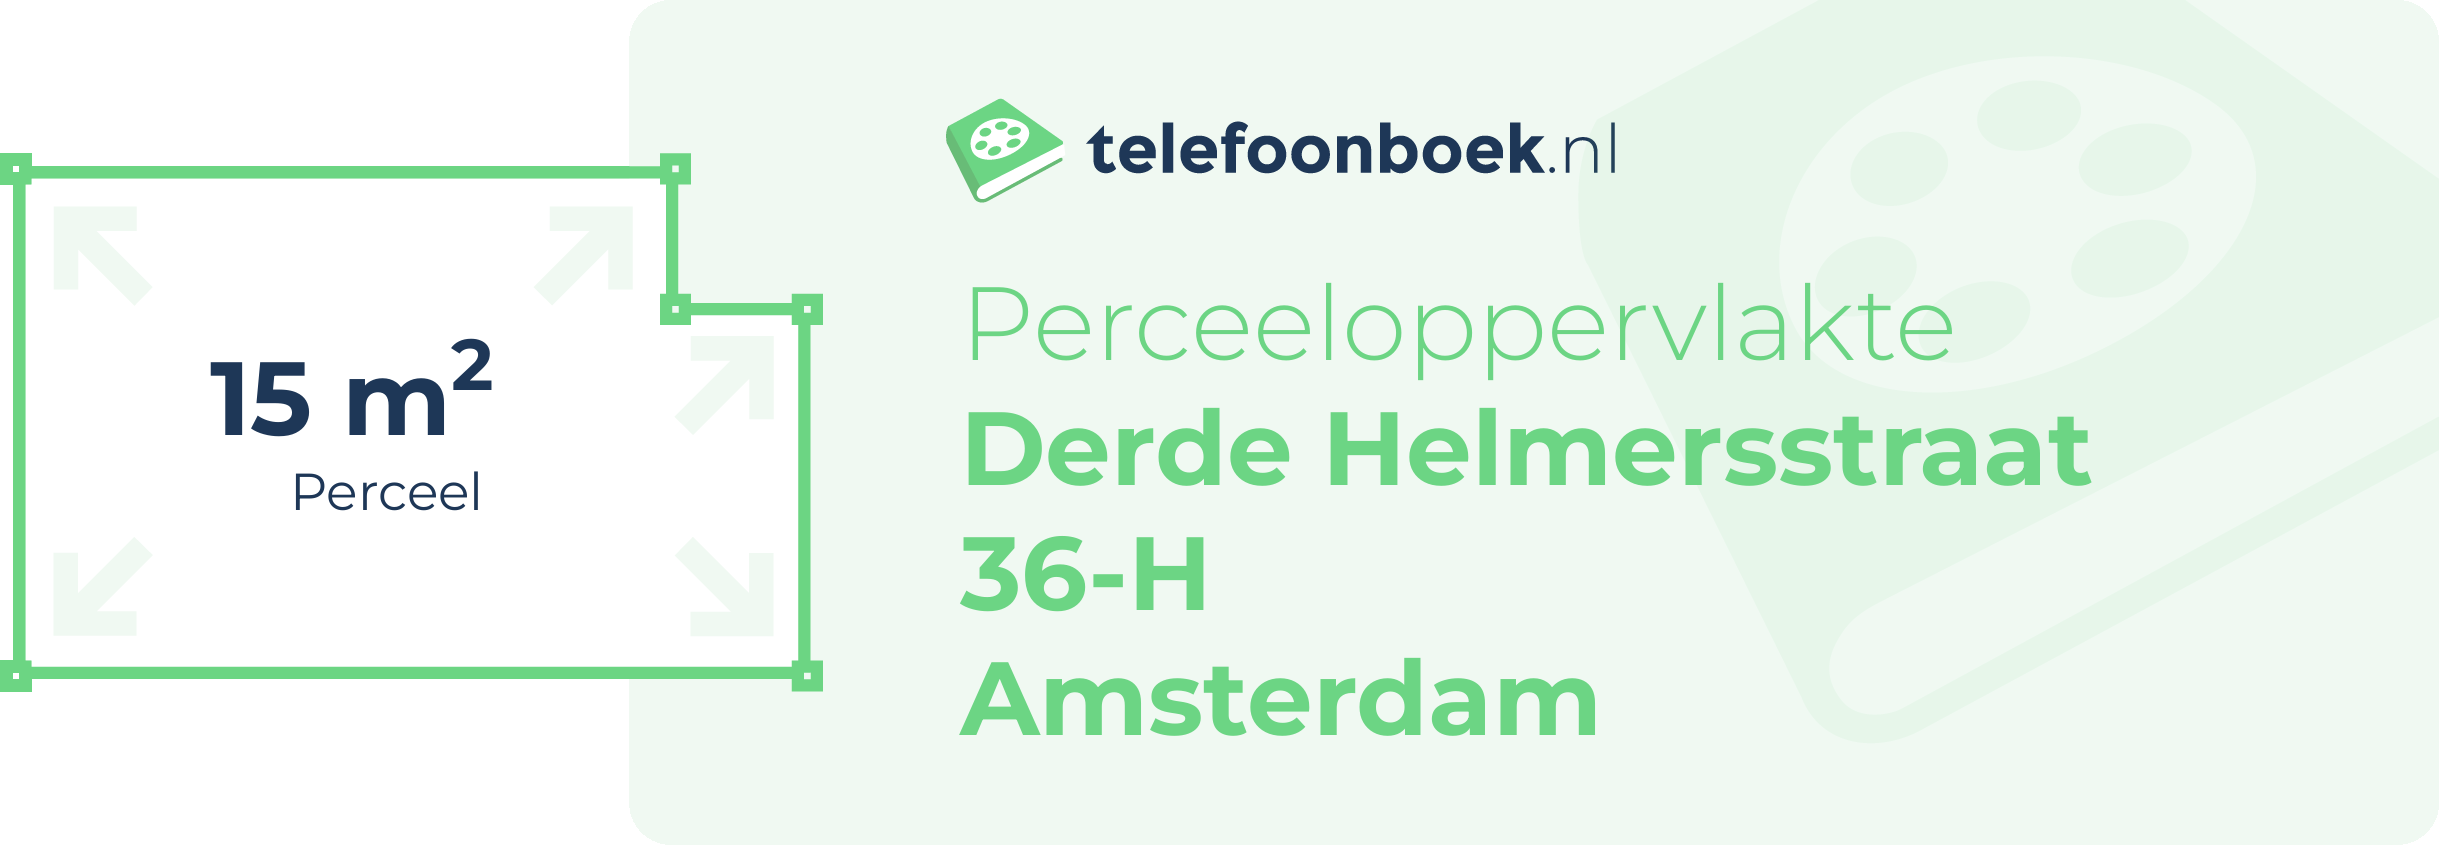 Perceeloppervlakte Derde Helmersstraat 36-H Amsterdam